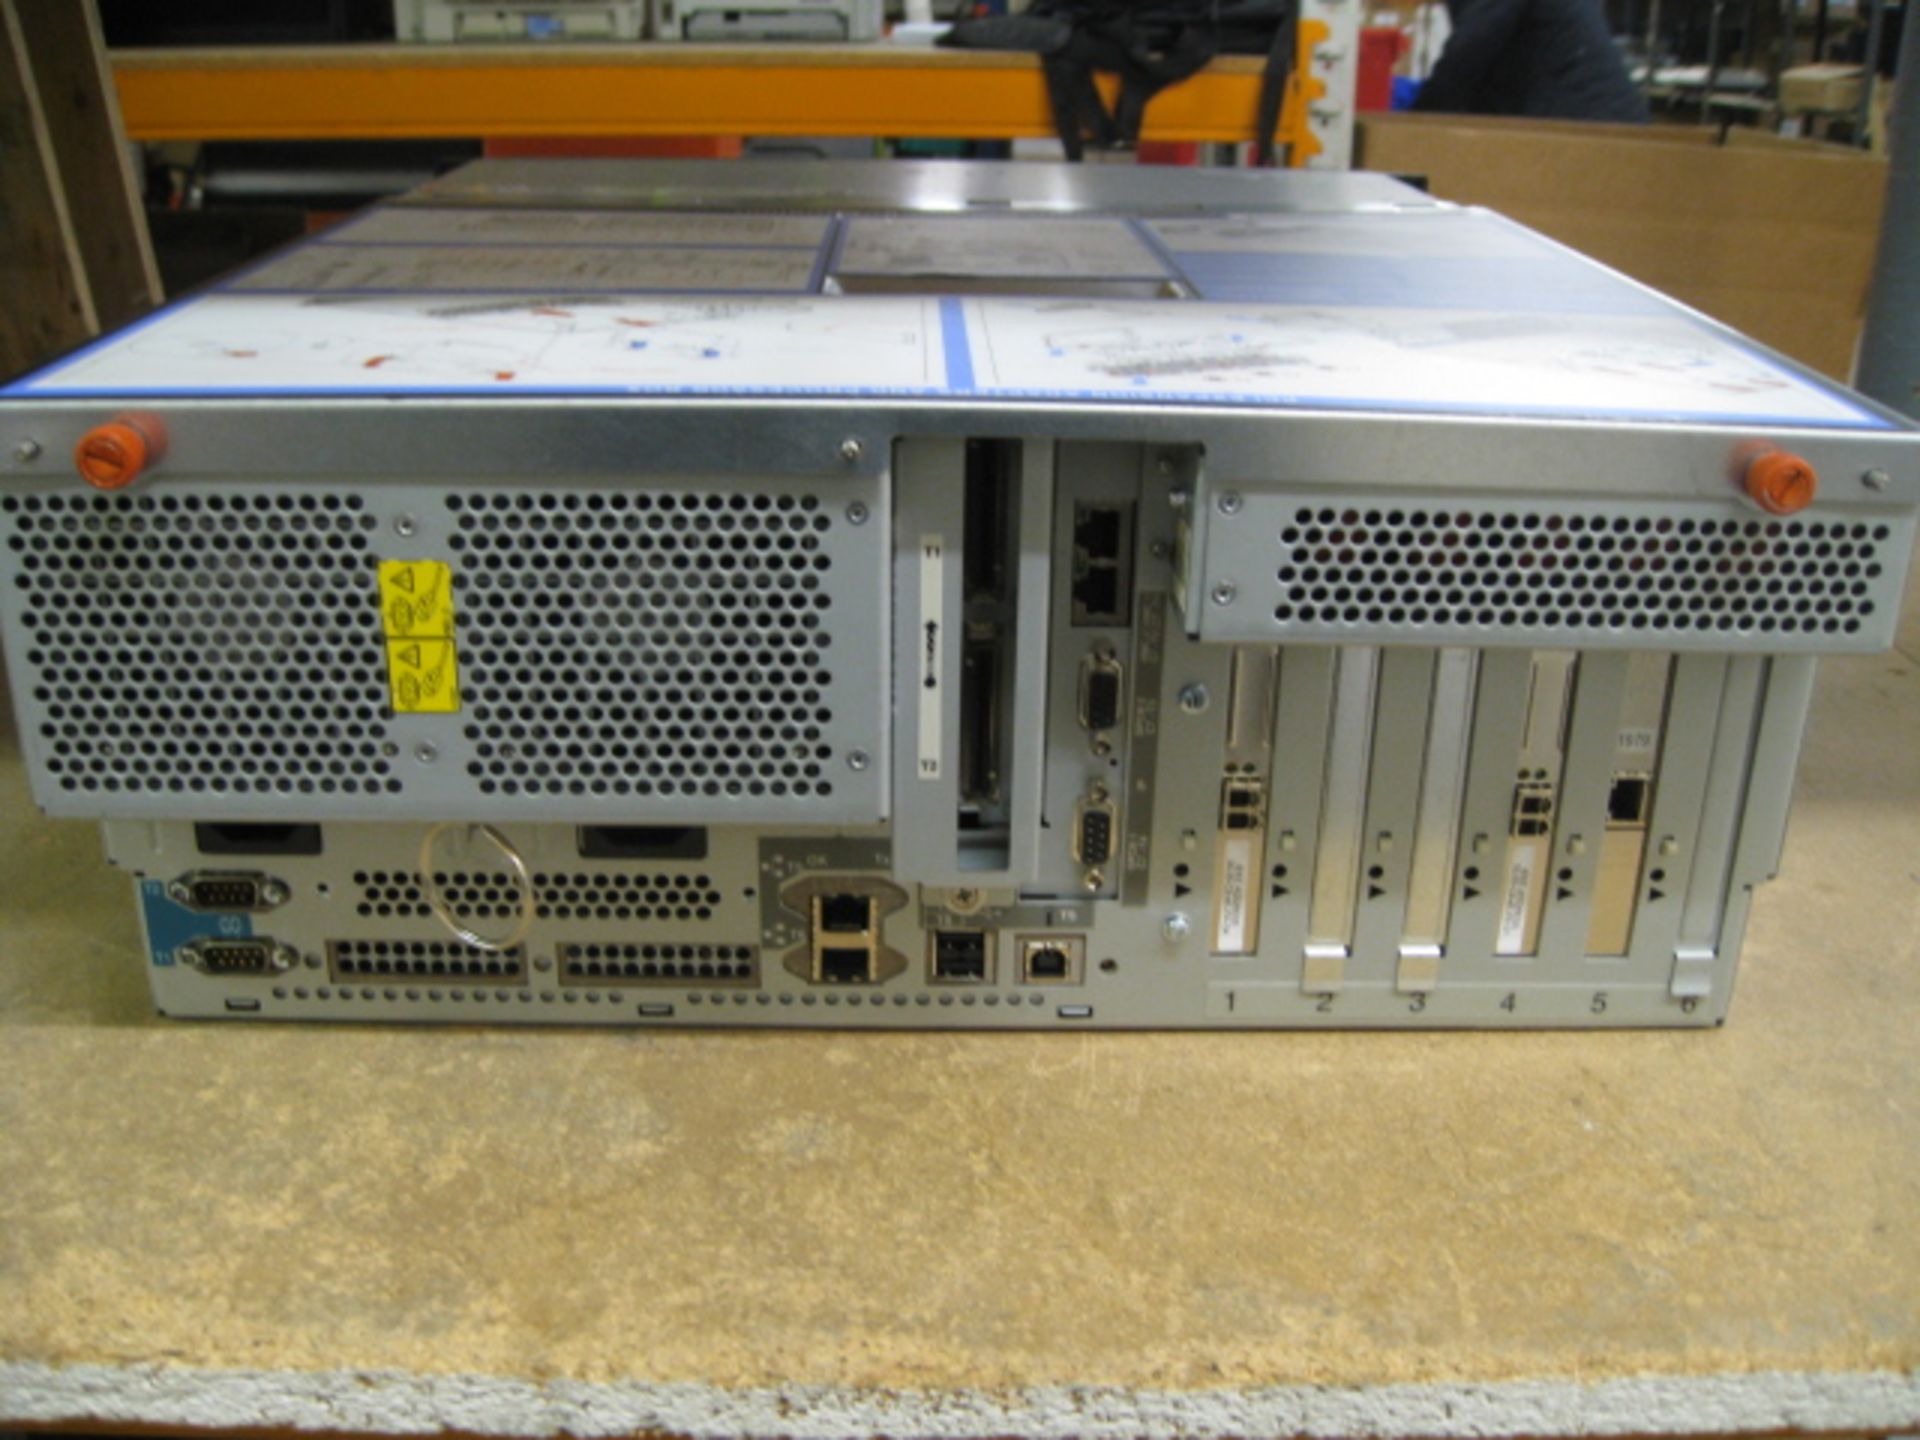 IBM SYSTEM P5 RACKMOUNT 4U FILESERVER TYPE 9131-52A. IBM93ZZ PROCESSOR, 16GB RAM, 6 X 300GB HDD' - Image 3 of 3